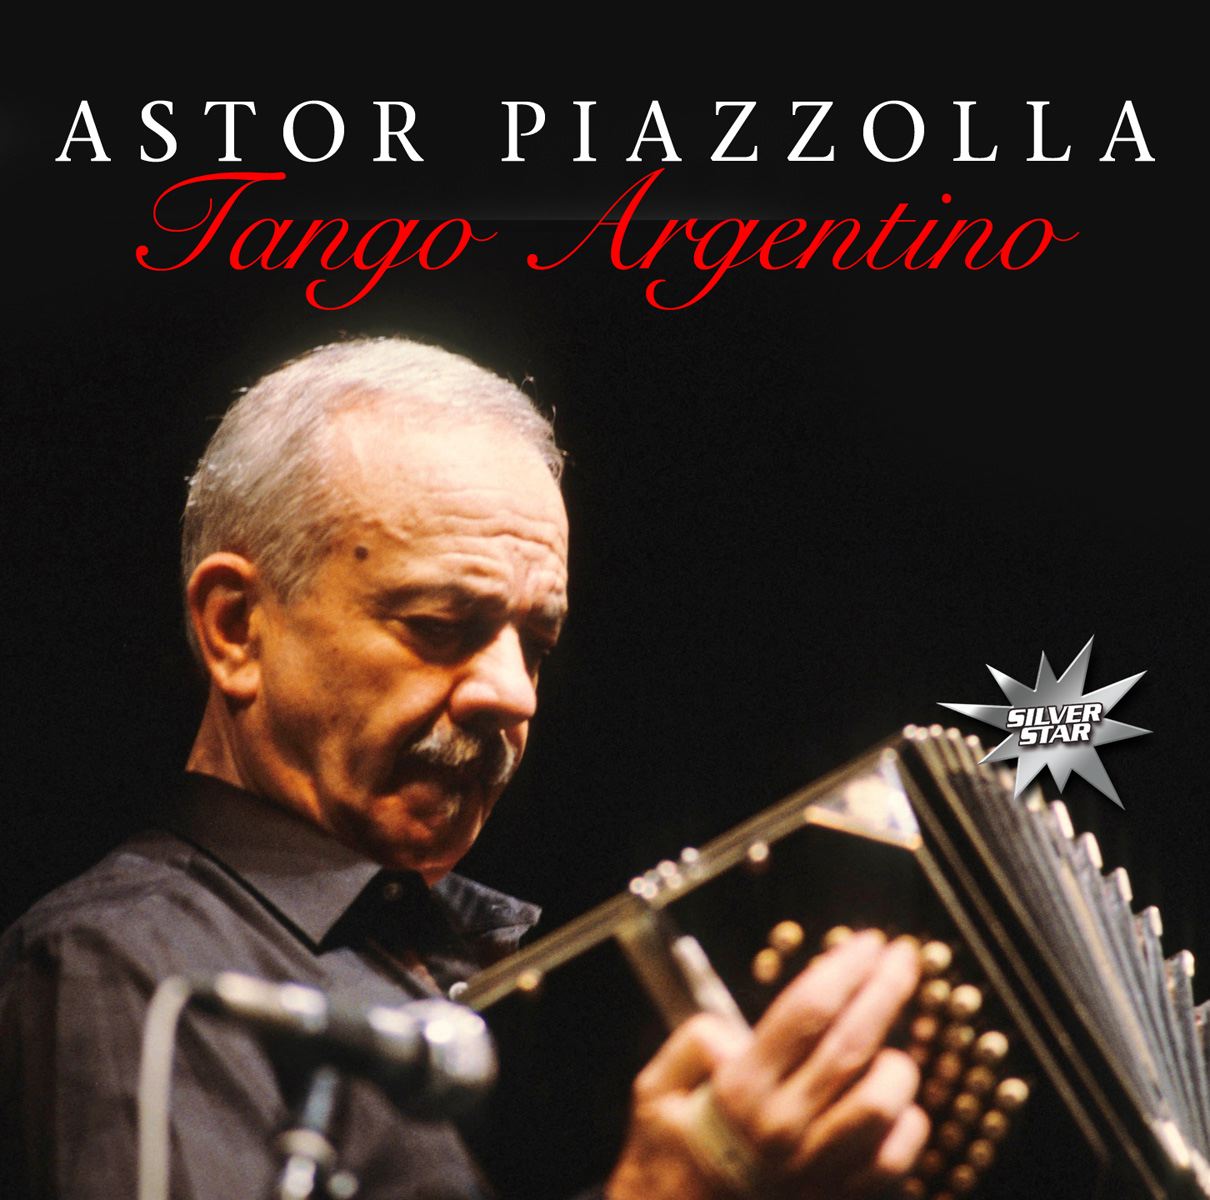 Astor Piazzolla - Tango Argentino - 33RPM